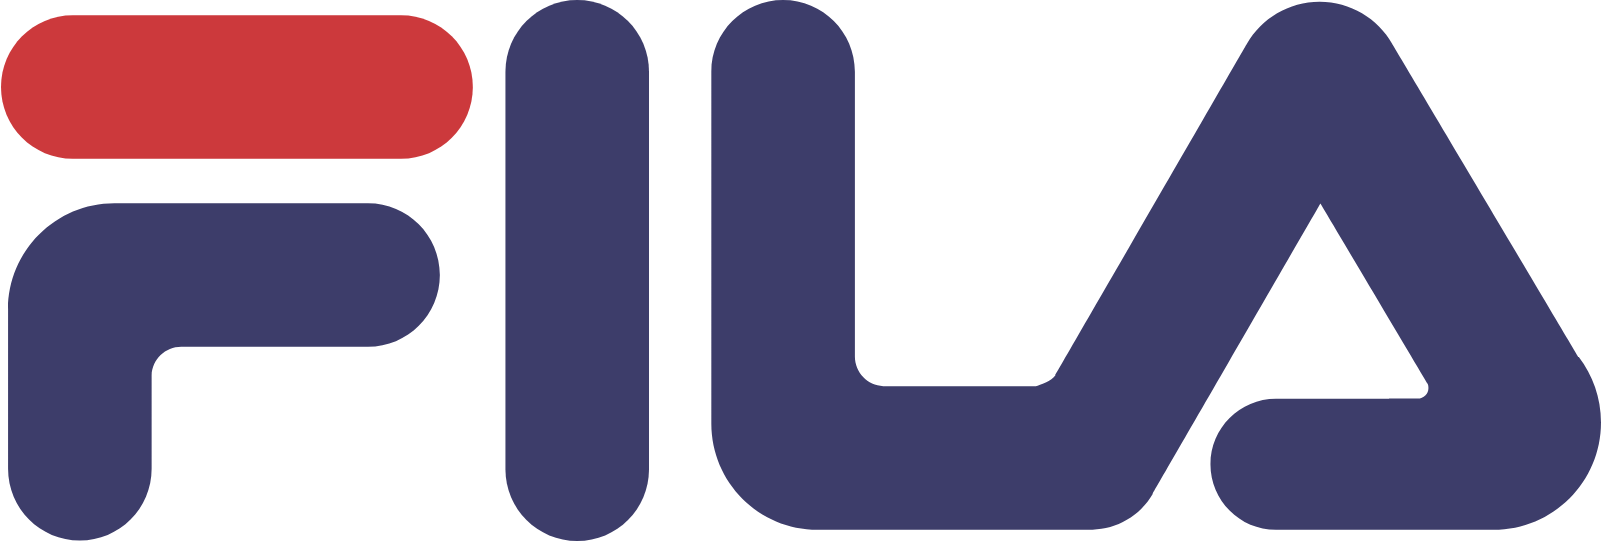 Fila logo (PNG transparent)